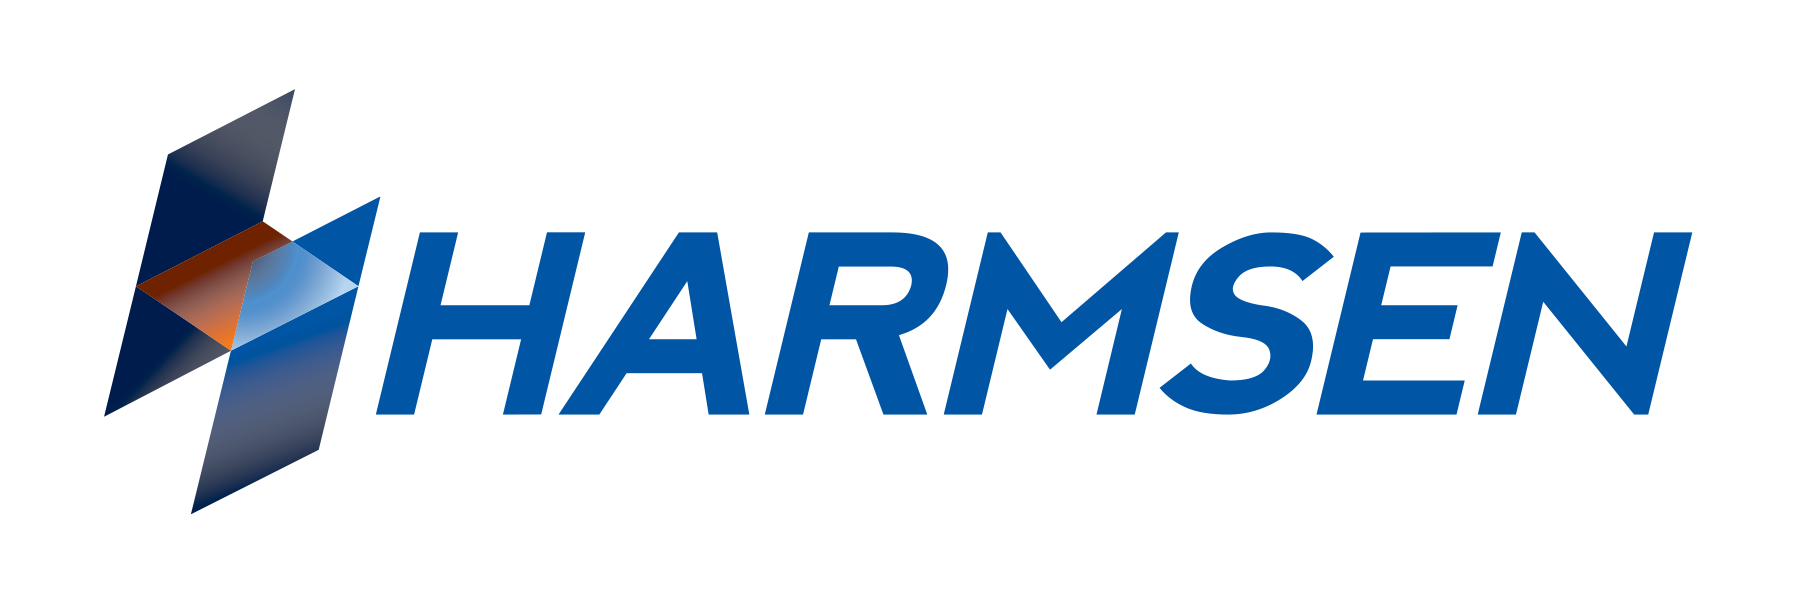 HARMSEN 2018 logo   FULL COLOR